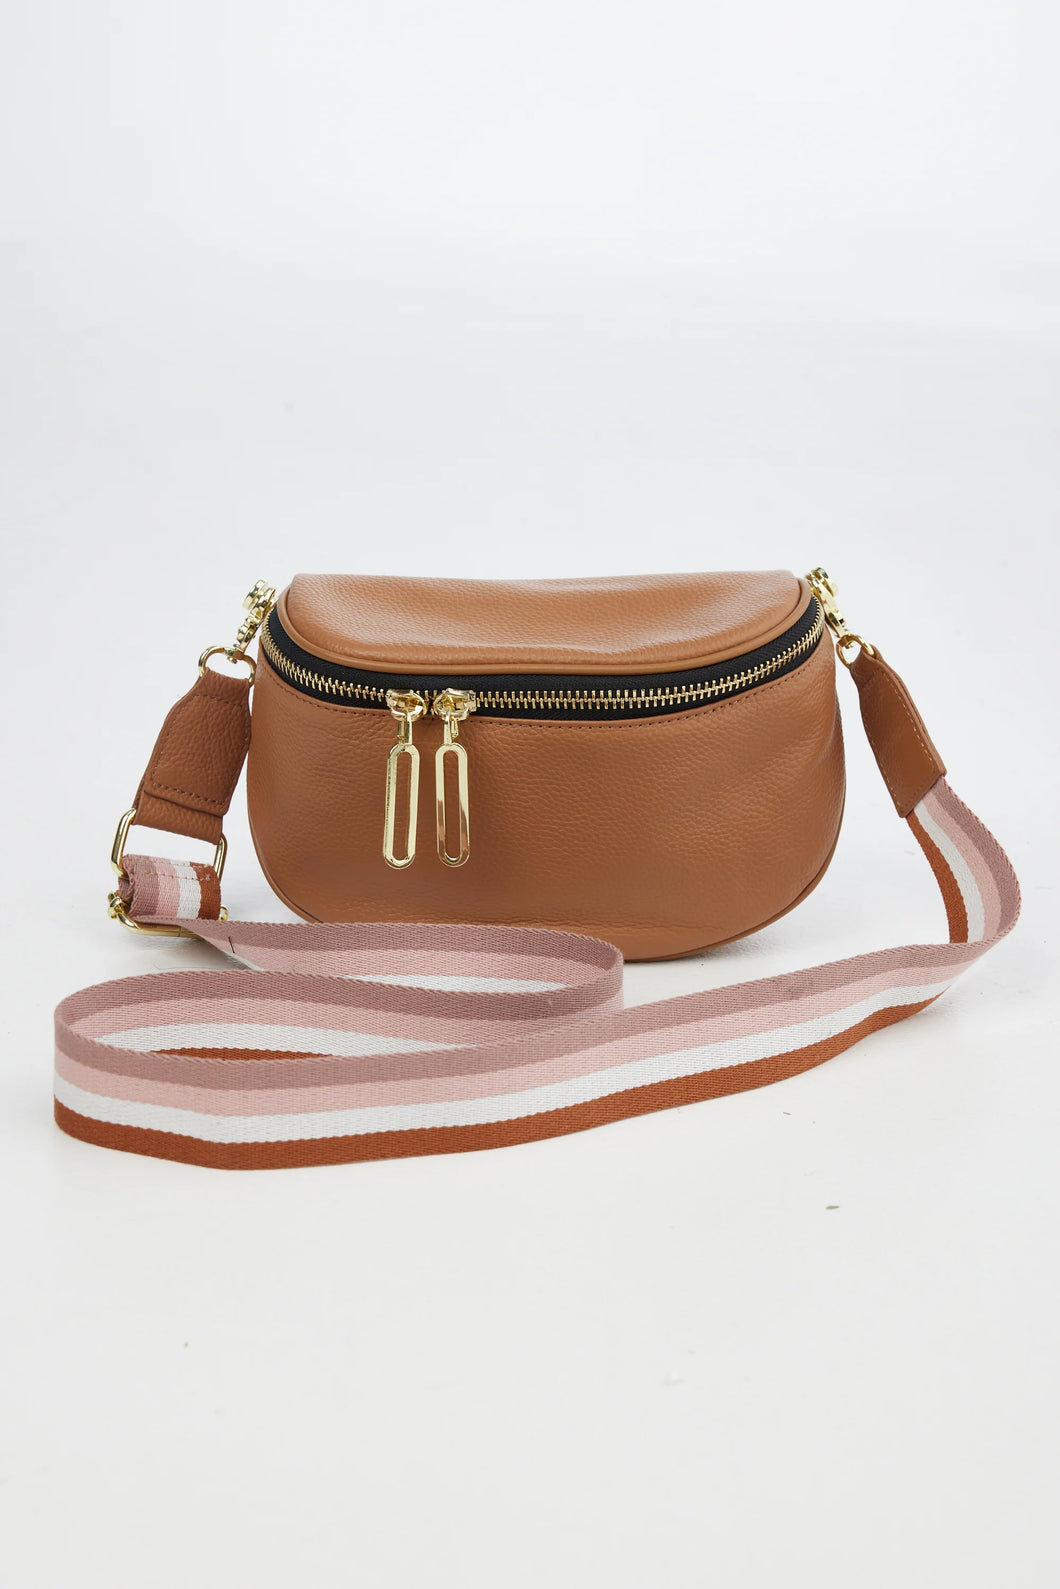 Kensington crossbody leather bag tan